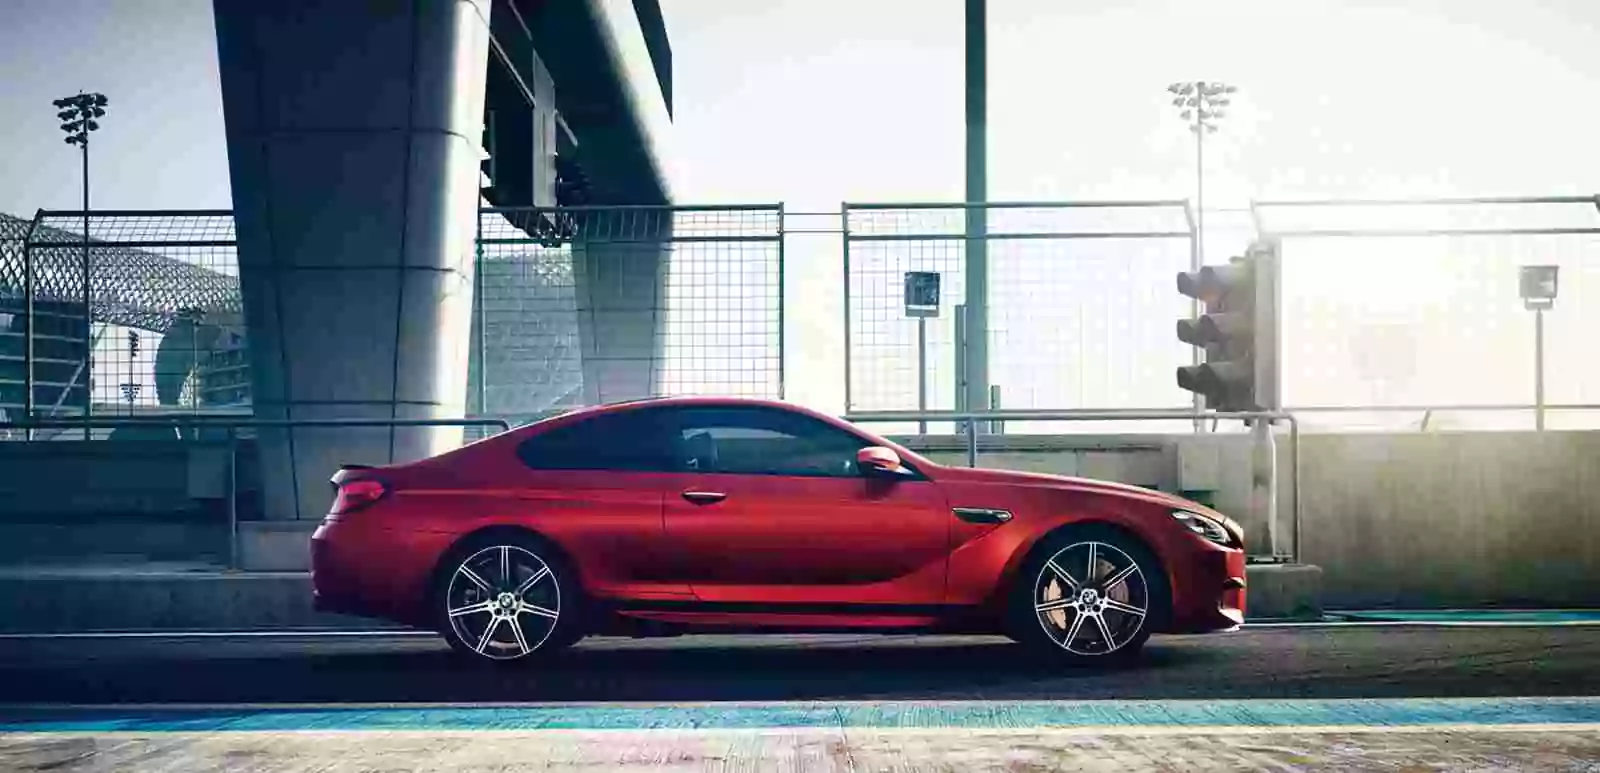 Where Can I Hire A BMW M6 In Dubai 